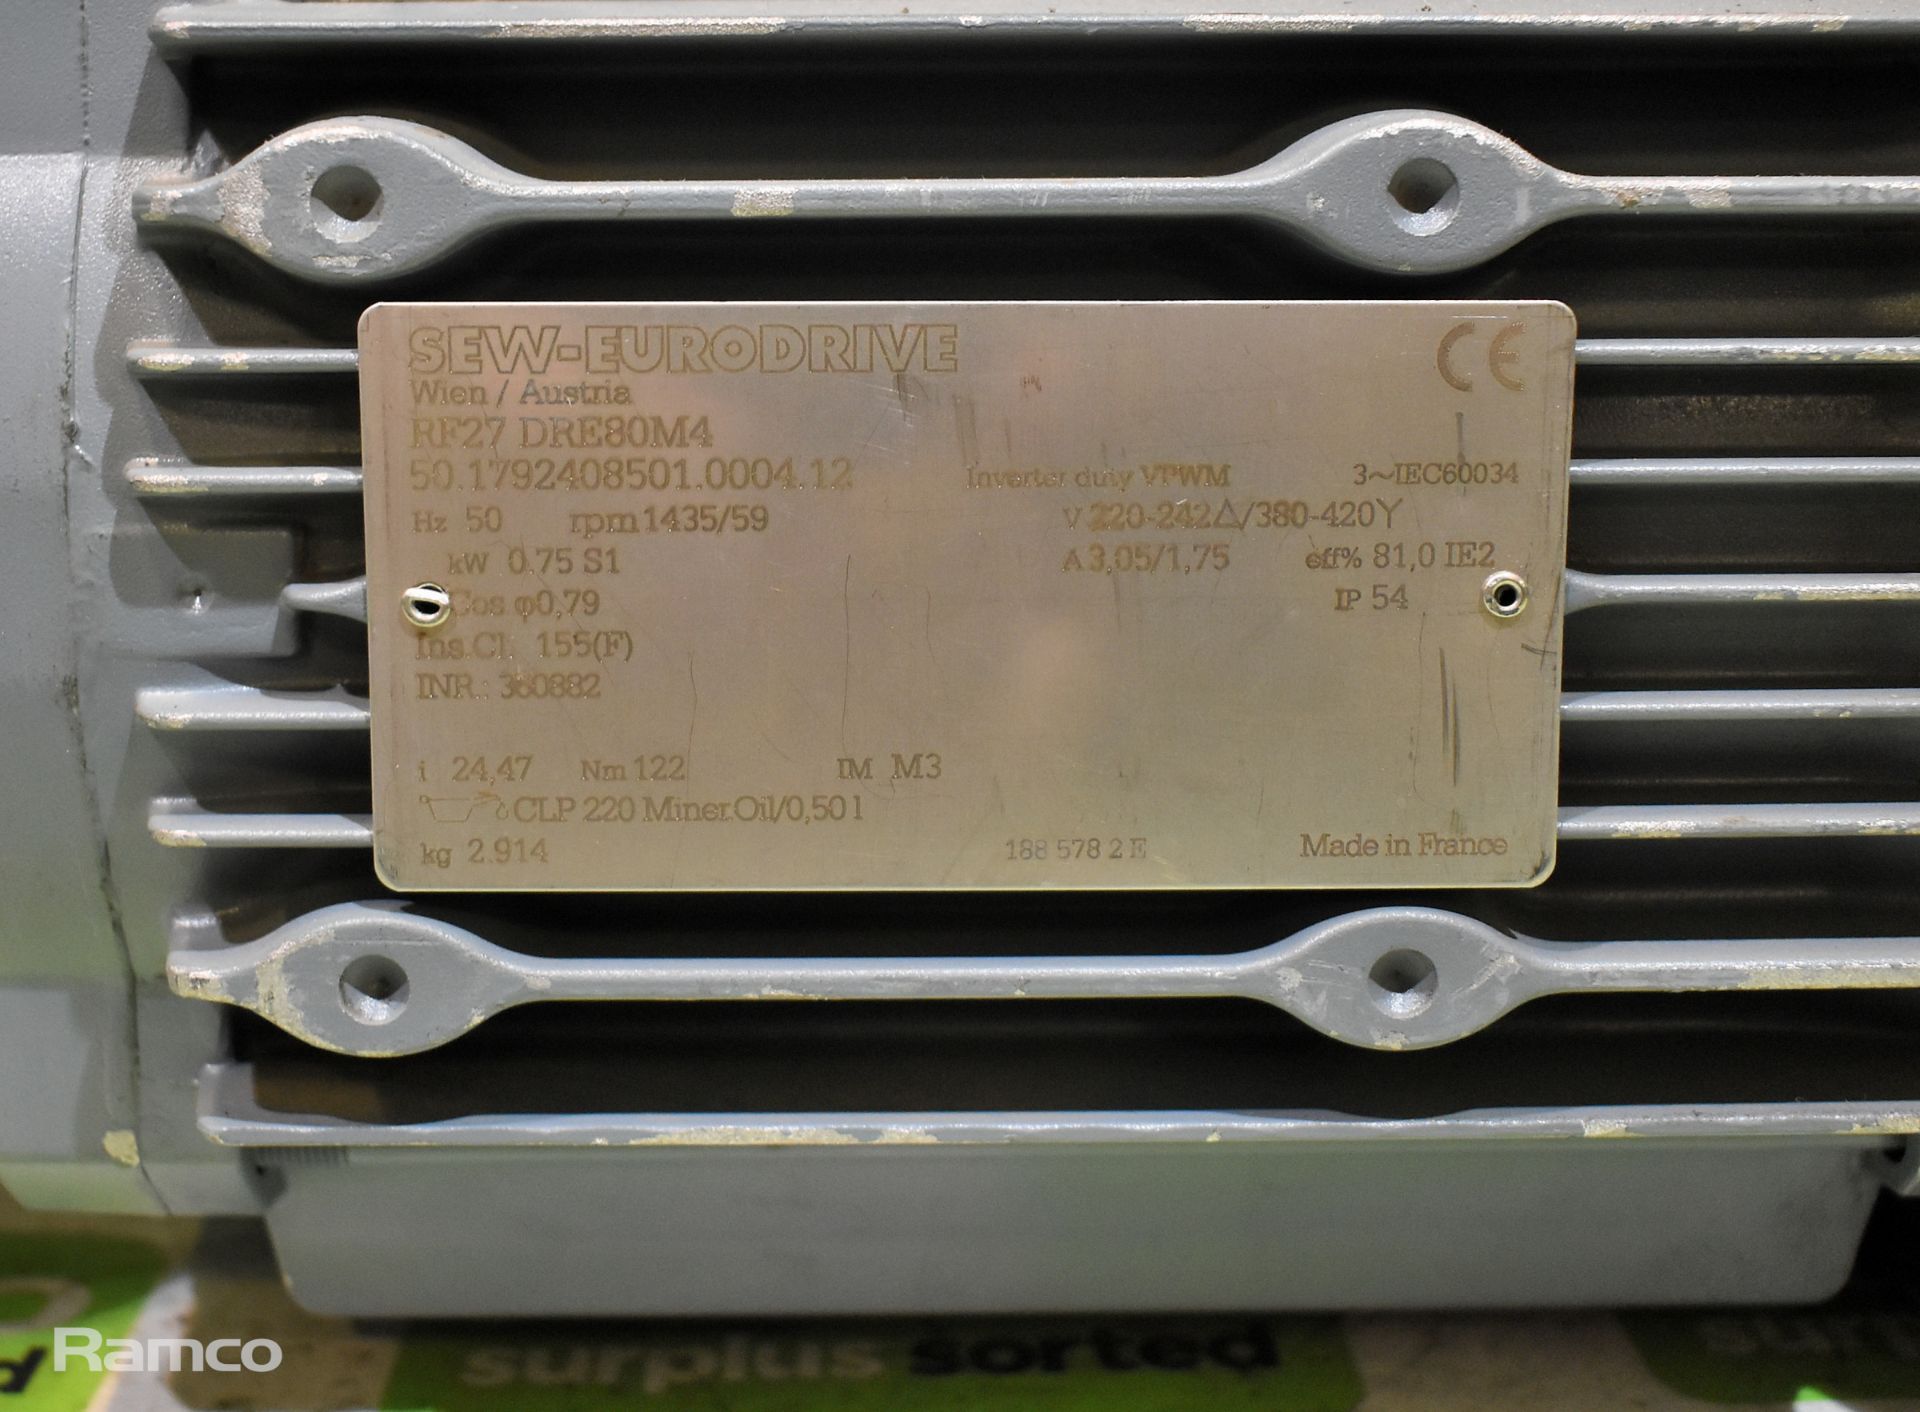 SEW-Eurodrive - RF27 DRE80M4 - gear electric motor - 1435/59 rpm - 0.75kW - 220-242/380-420V - Image 2 of 5